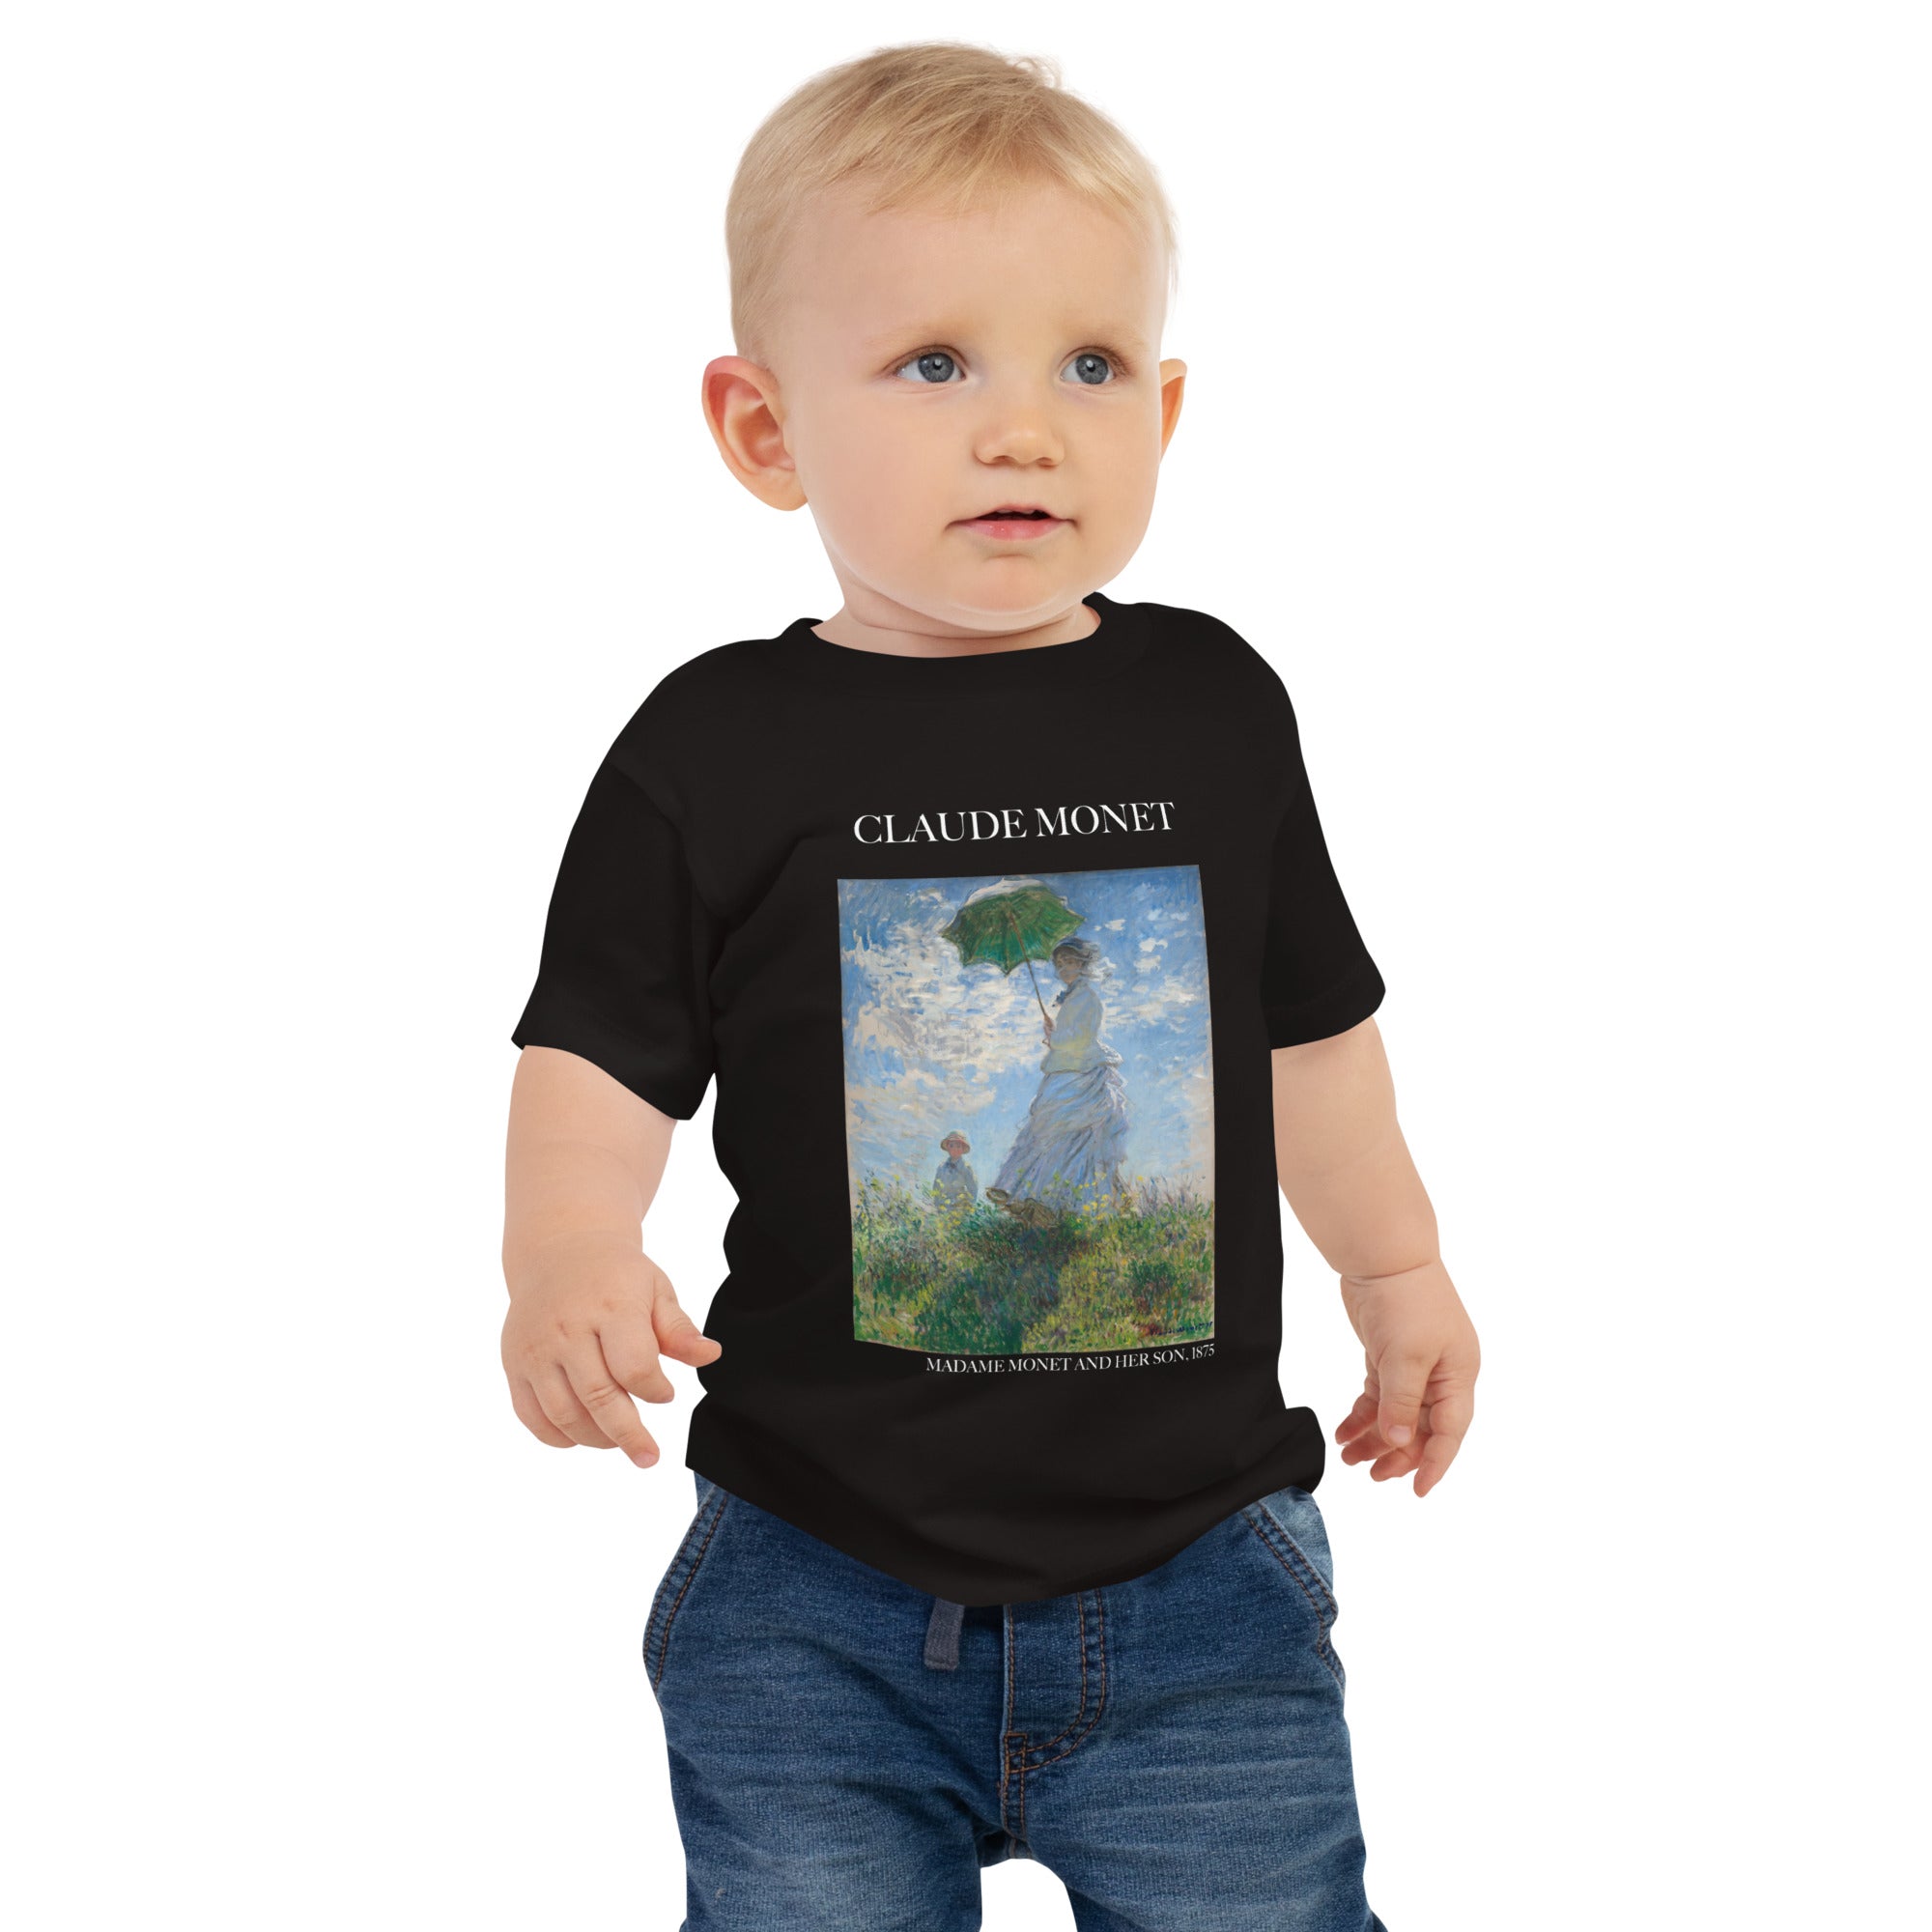 Claude Monet 'Madame Monet and Her Son' Famous Painting Baby Staple T-Shirt | Premium Baby Art Tee